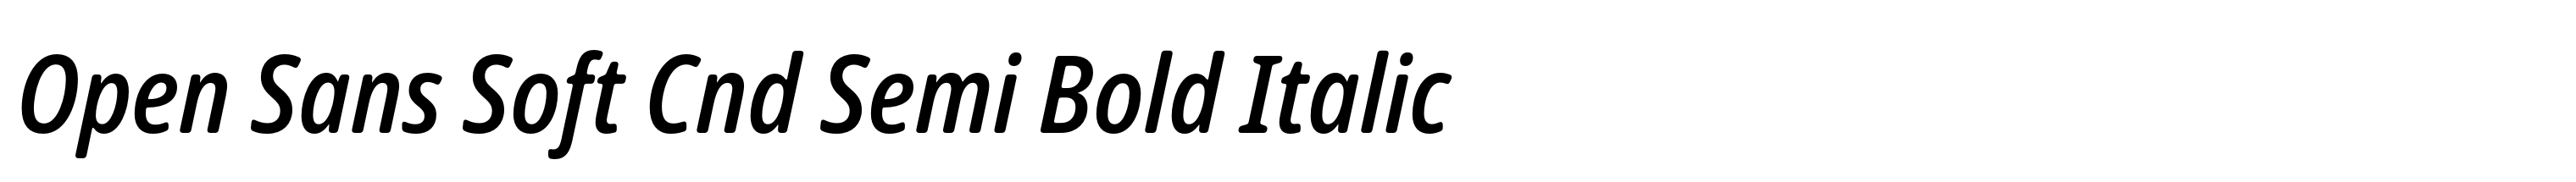 Open Sans Soft Cnd Semi Bold Italic